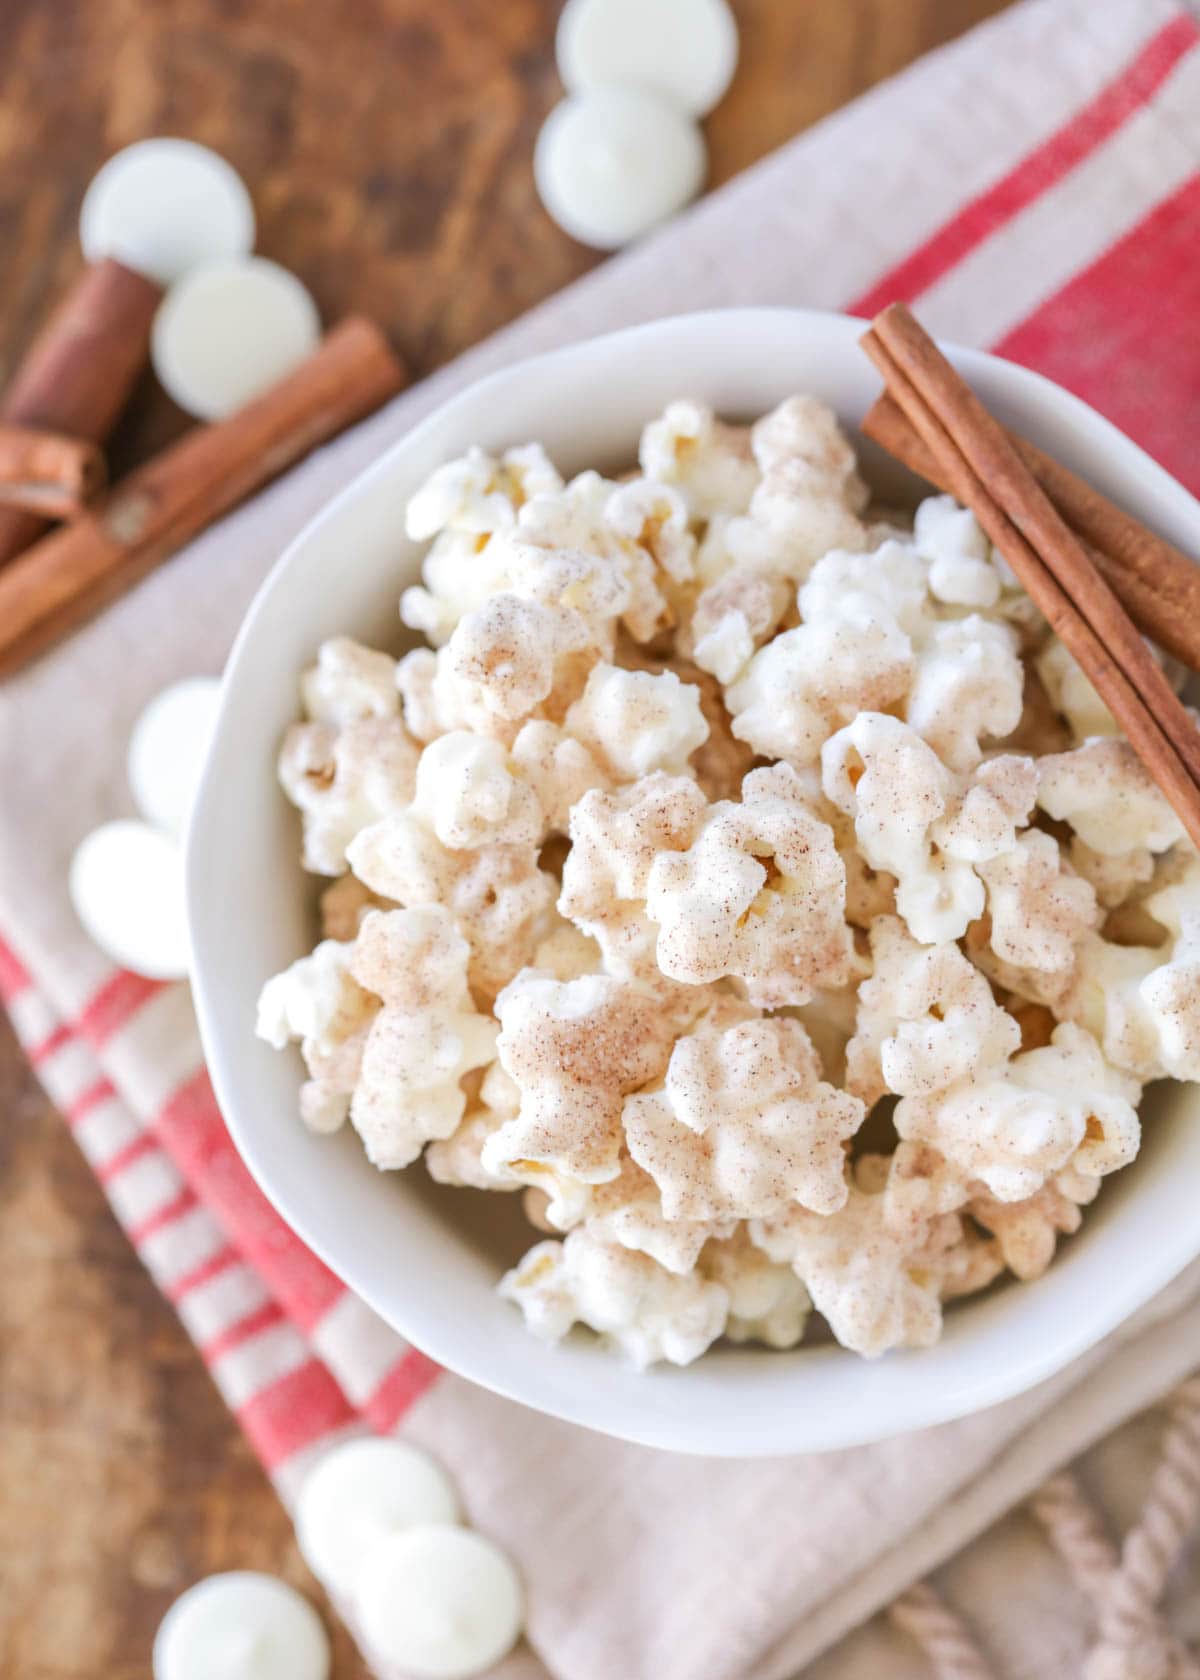 Churro flavored popcorn in a white bowl